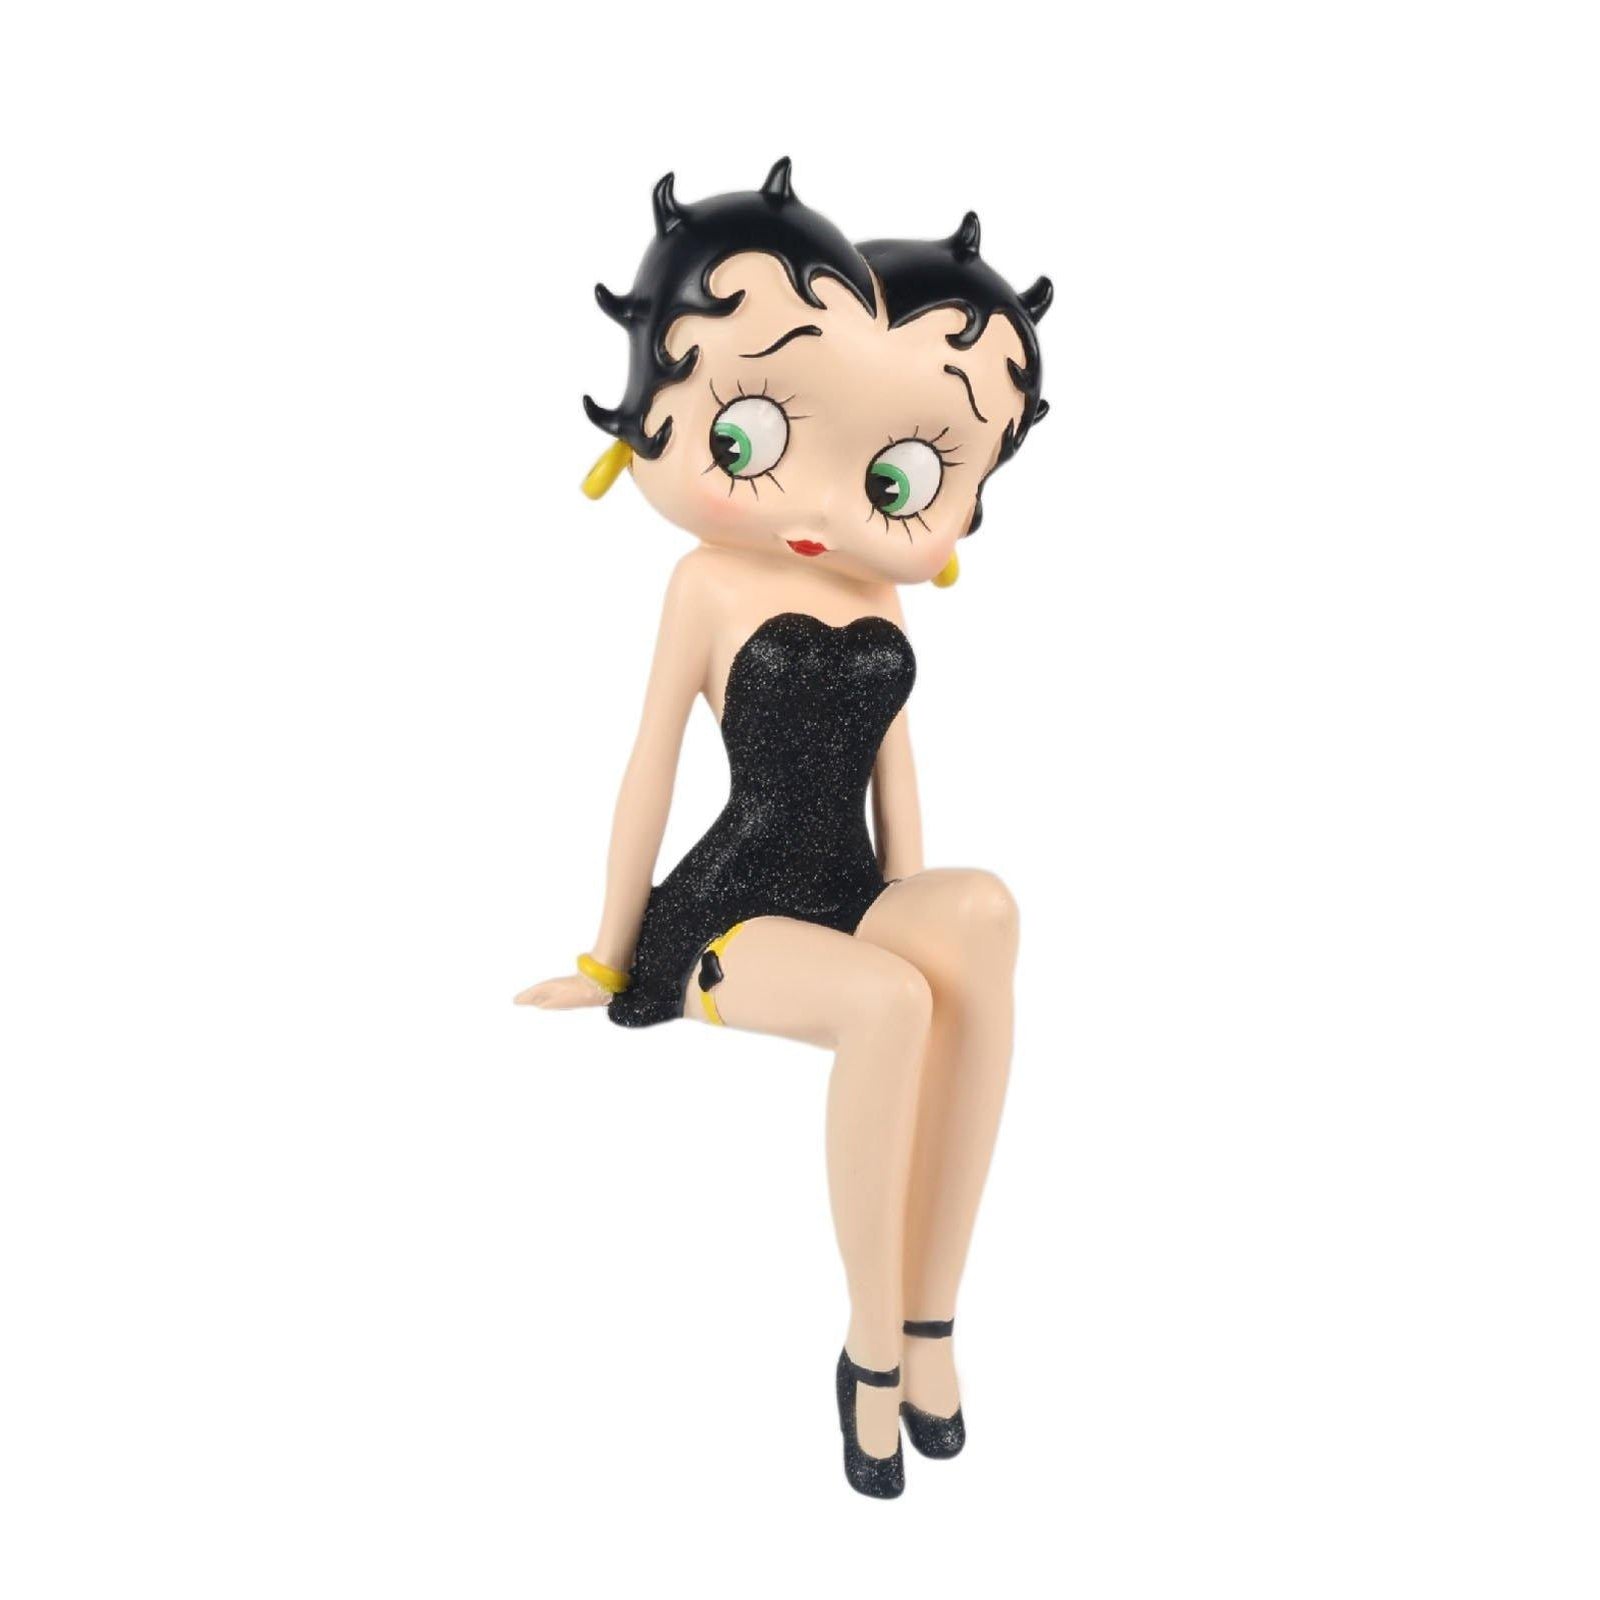 Betty Boop Shelf Sitter Black Dress (Betty Boop) - Gallery Gifts Online 